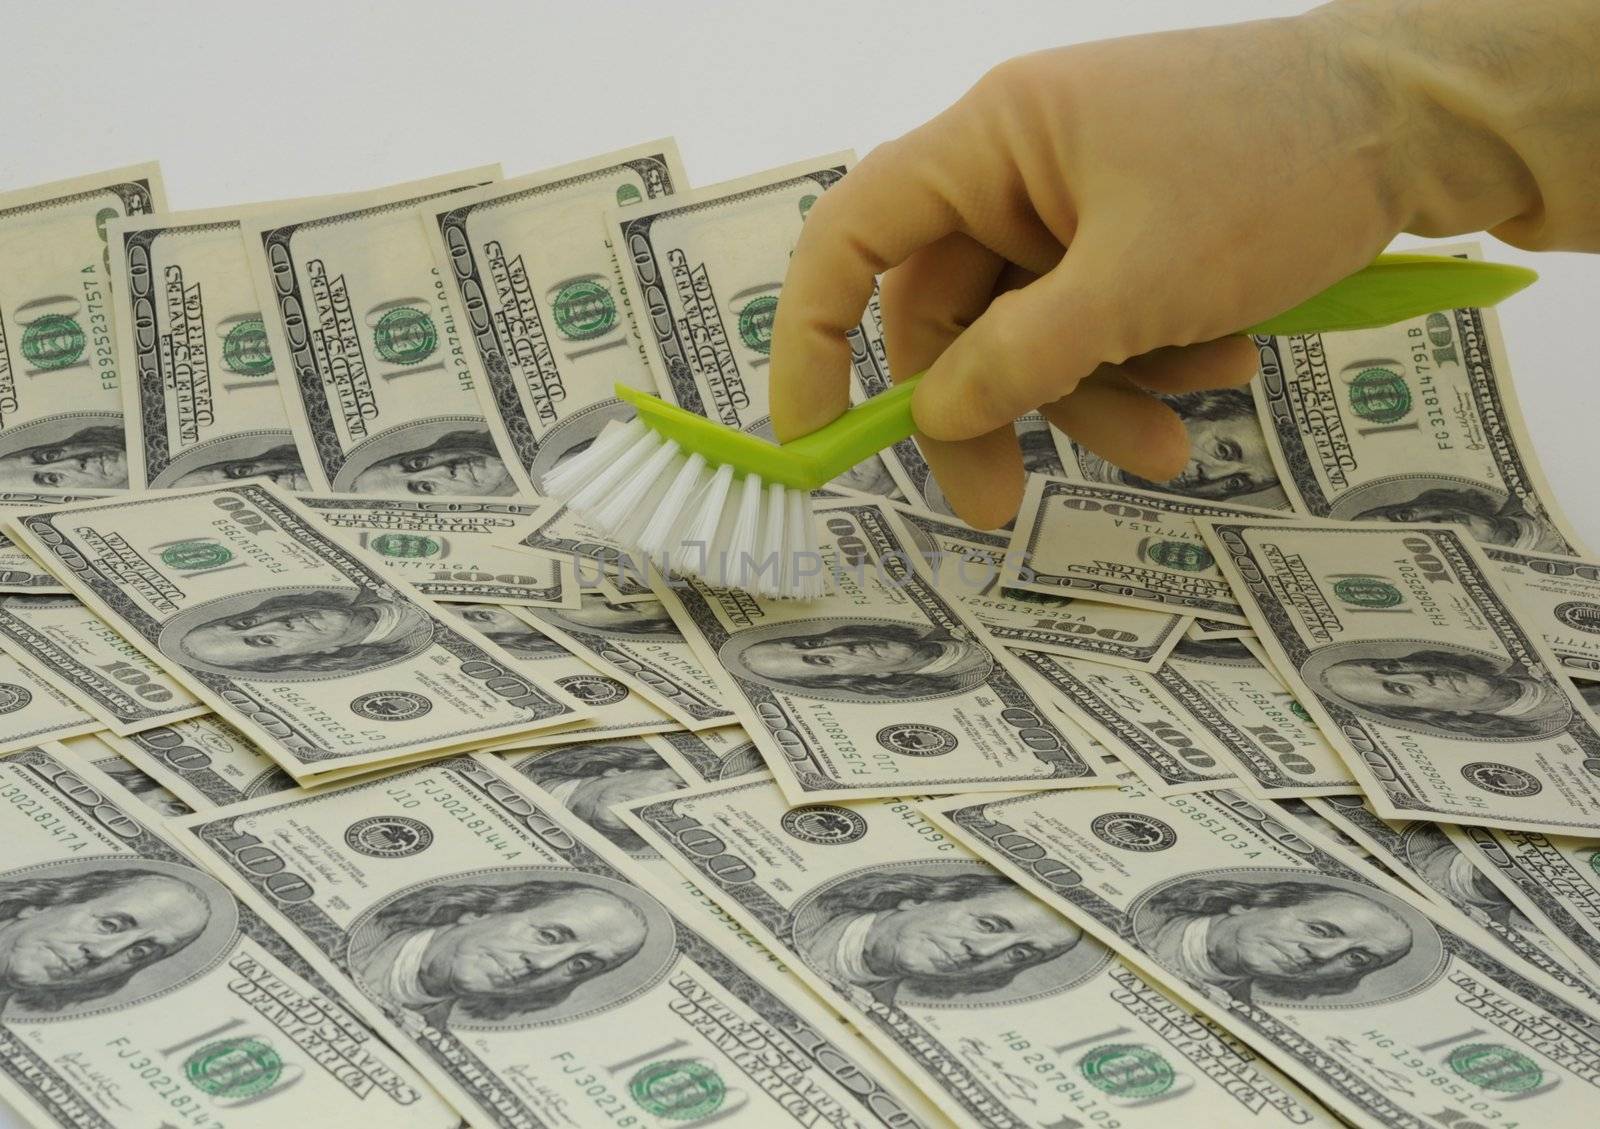 Money Laundering Scheme, Washing US Dollars.
 Symbol of Financial Fraud.